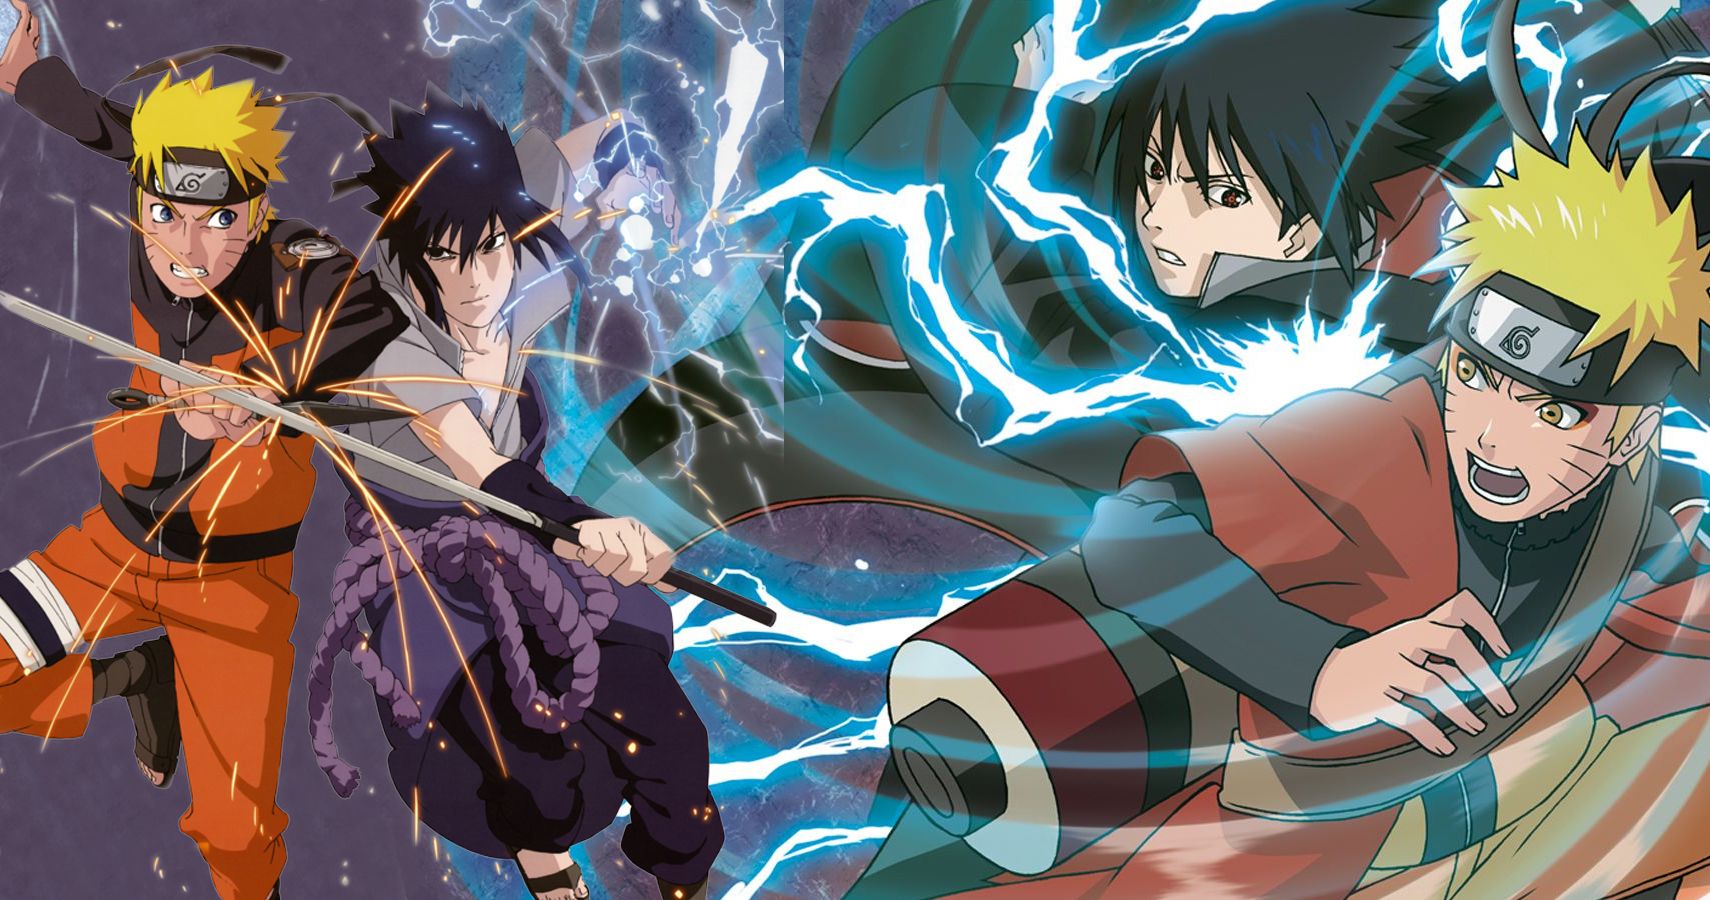 Can Sasuke Beat Naruto?